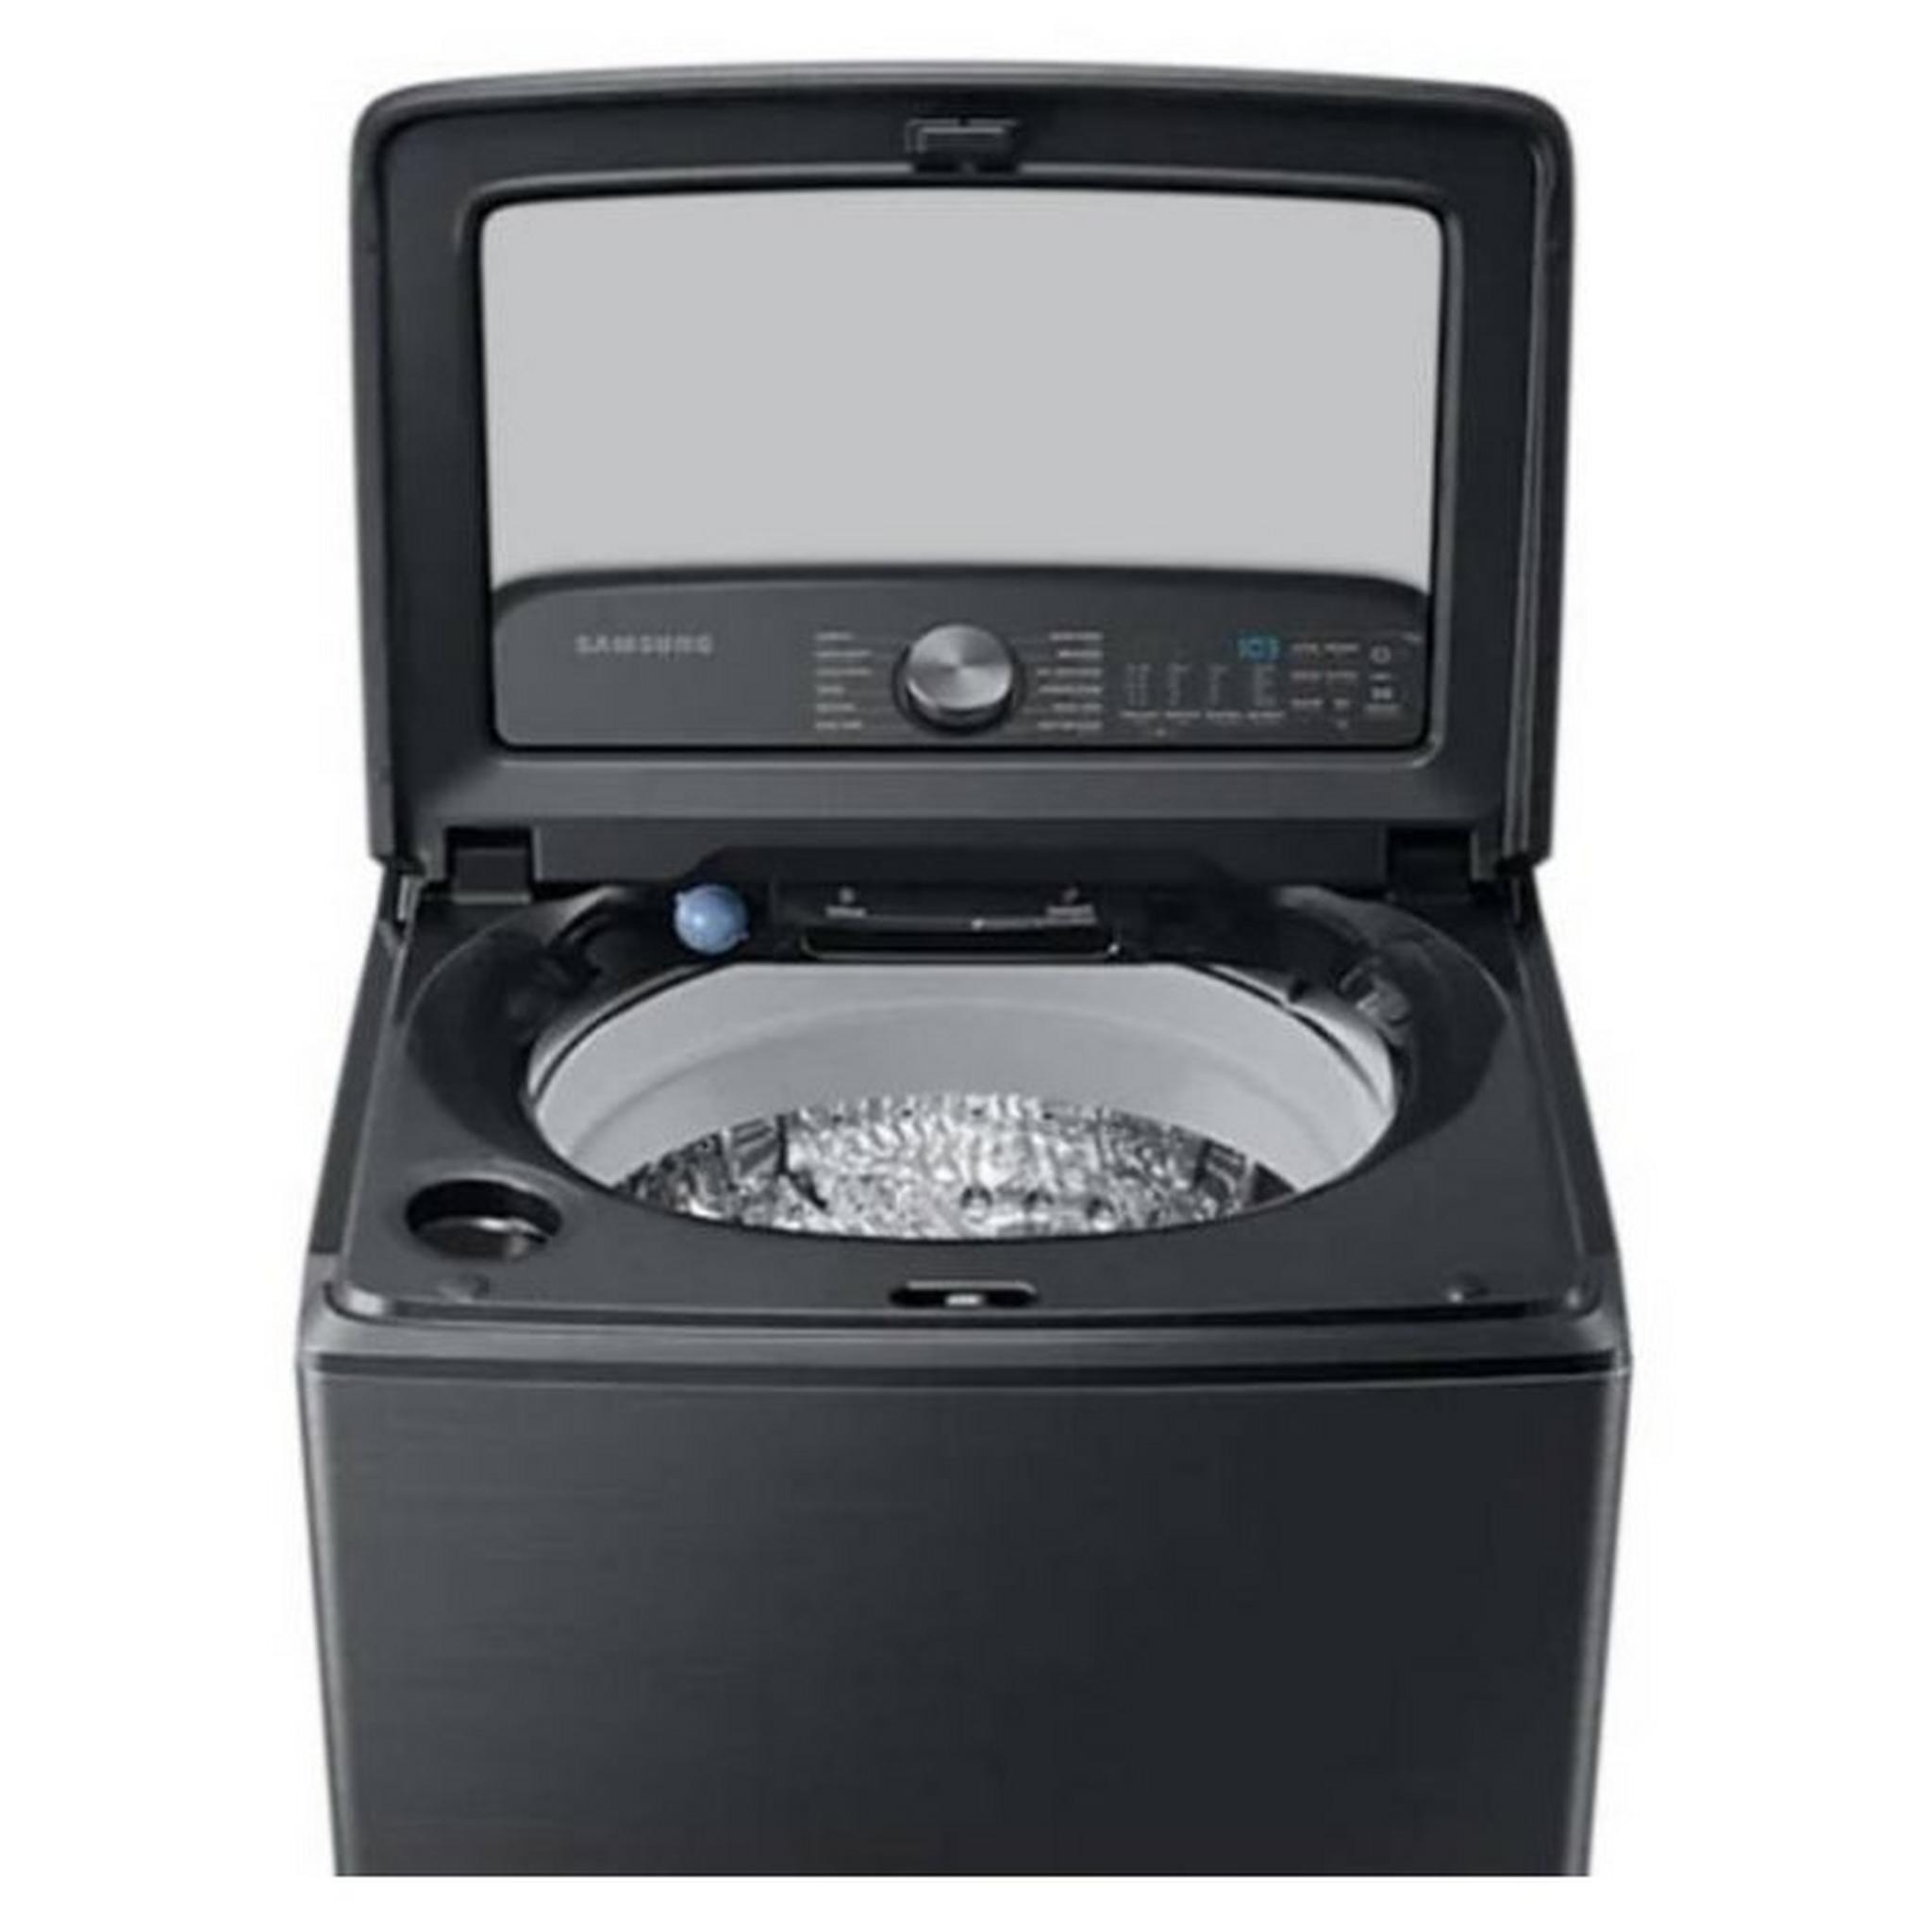 Samsung Washer Top Load 21 Kg (WA21A8376GV) Black